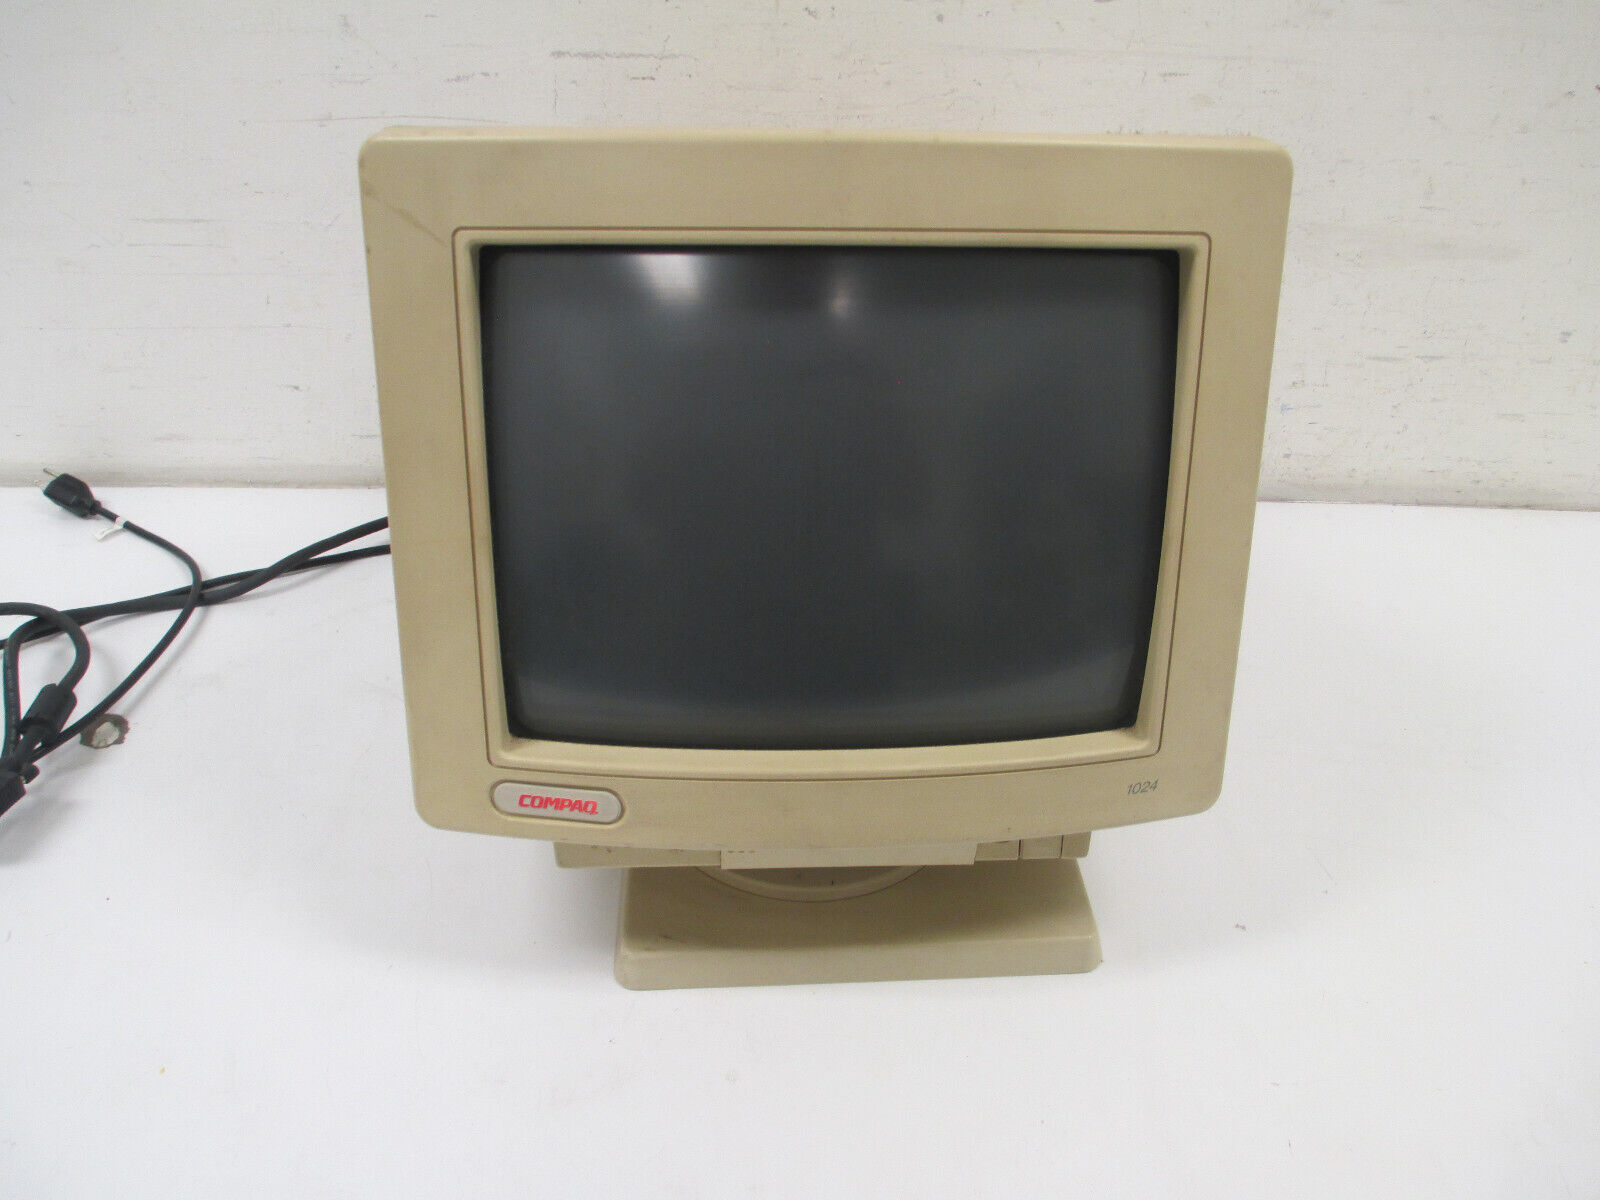 Vintage Compaq 462 CRT Monitor 1995 w/ cords